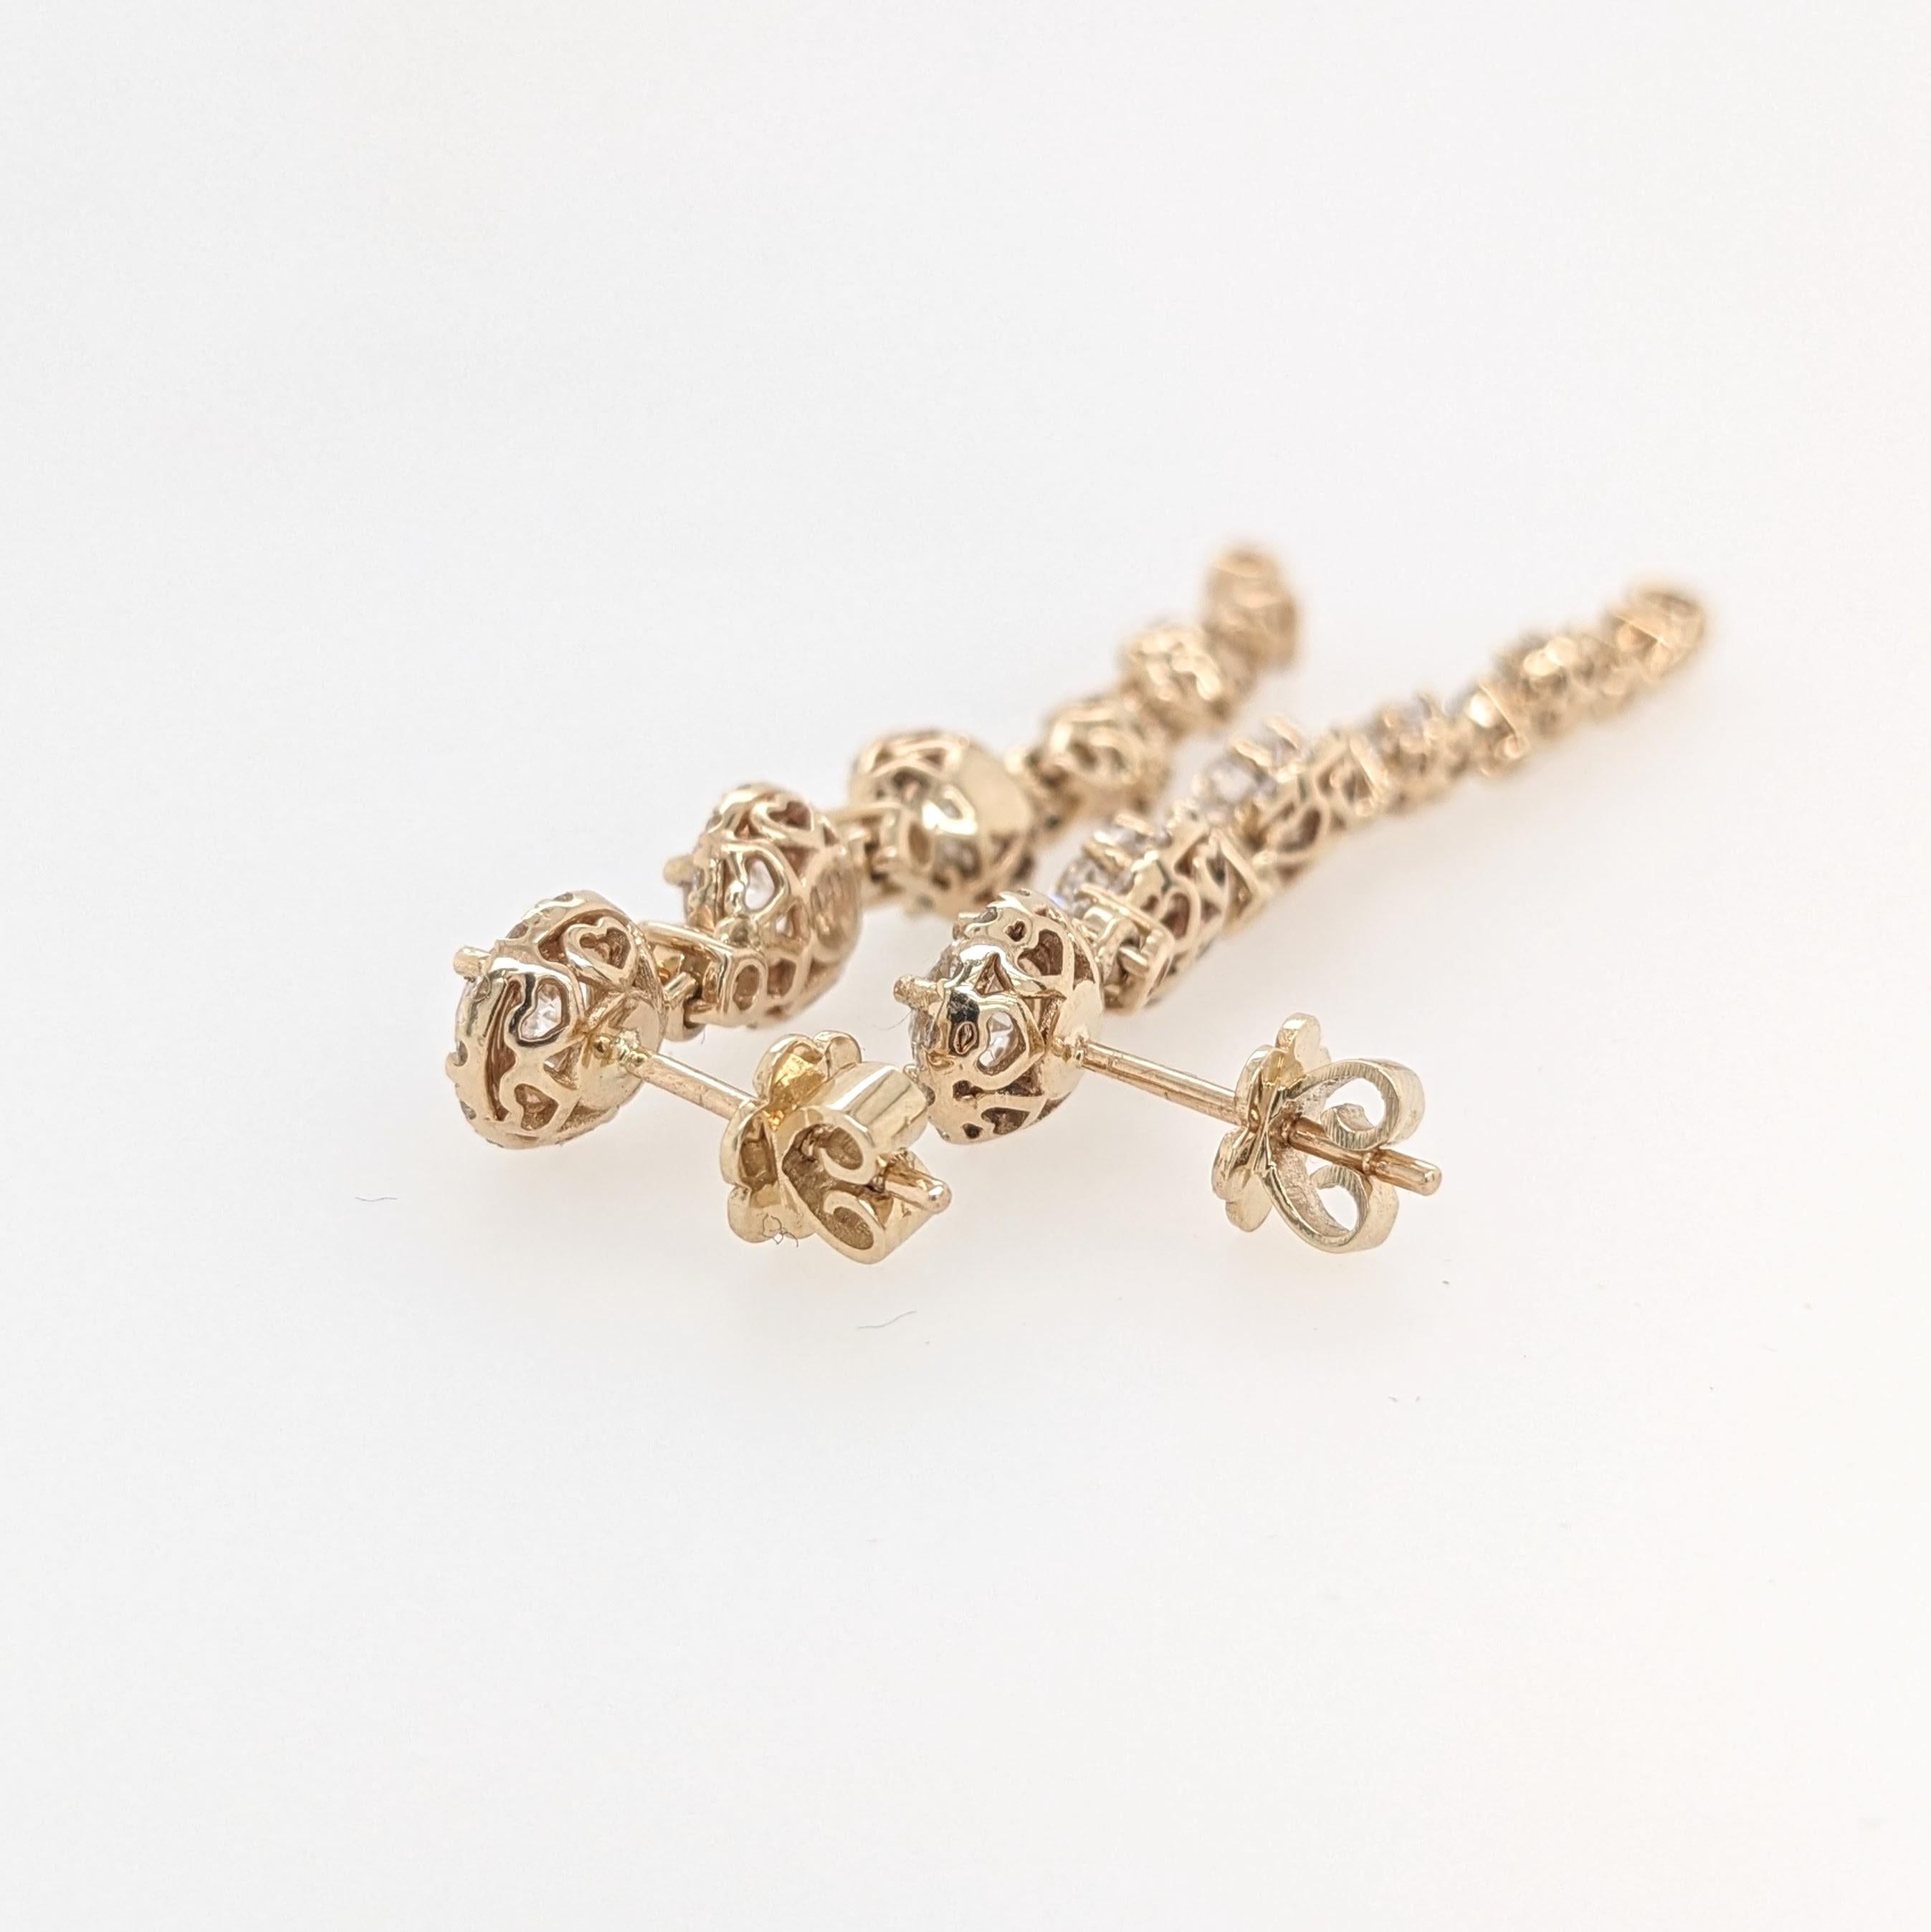 Diamond Dangle Earrings in Solid 14K Gold Round 4mm | Earth Mined & Lab Diamonds